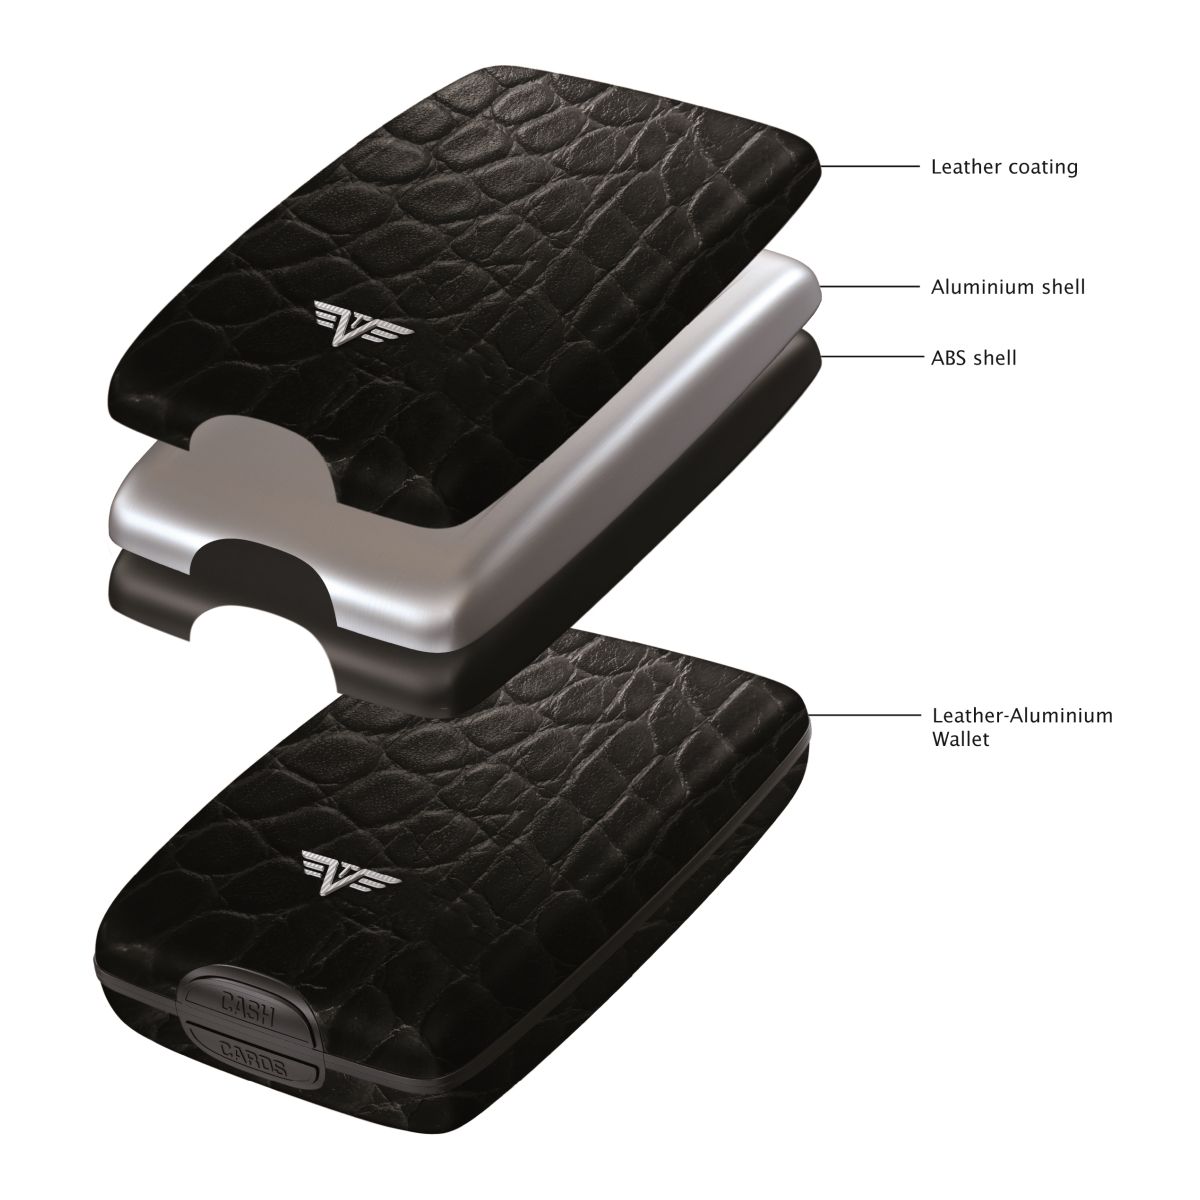 TRU VIRTU Aluminum Wallet Beluga - Money & Cards - Leather Line - Corco Black